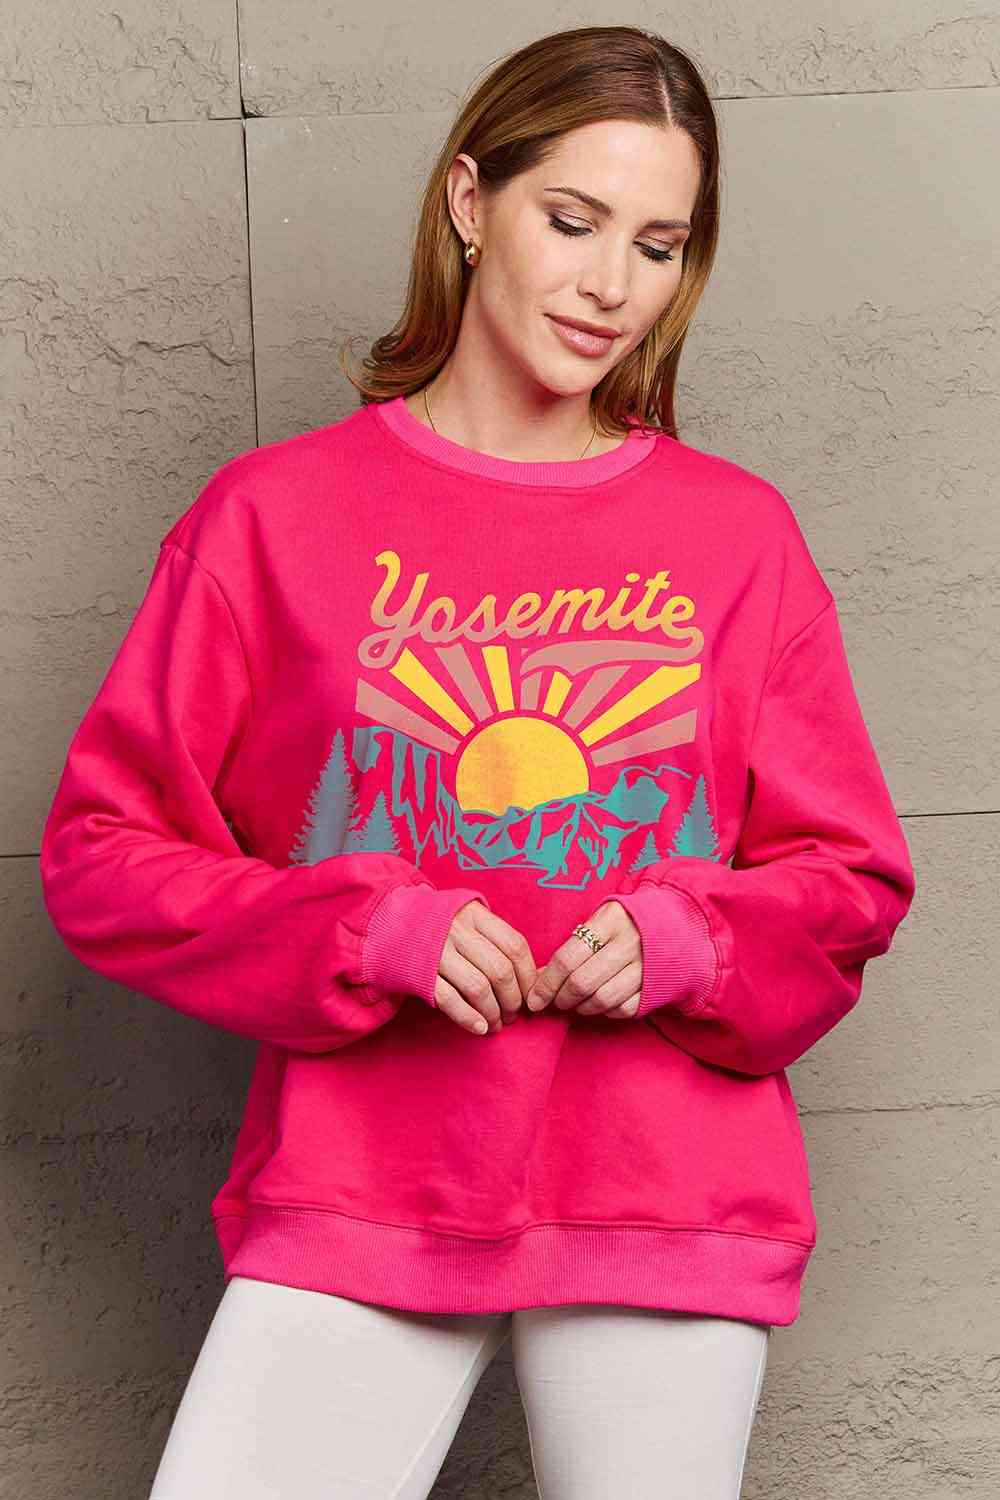 Simply Love Simply Love Full Size YOSEMITE Graphic Sweatshirt